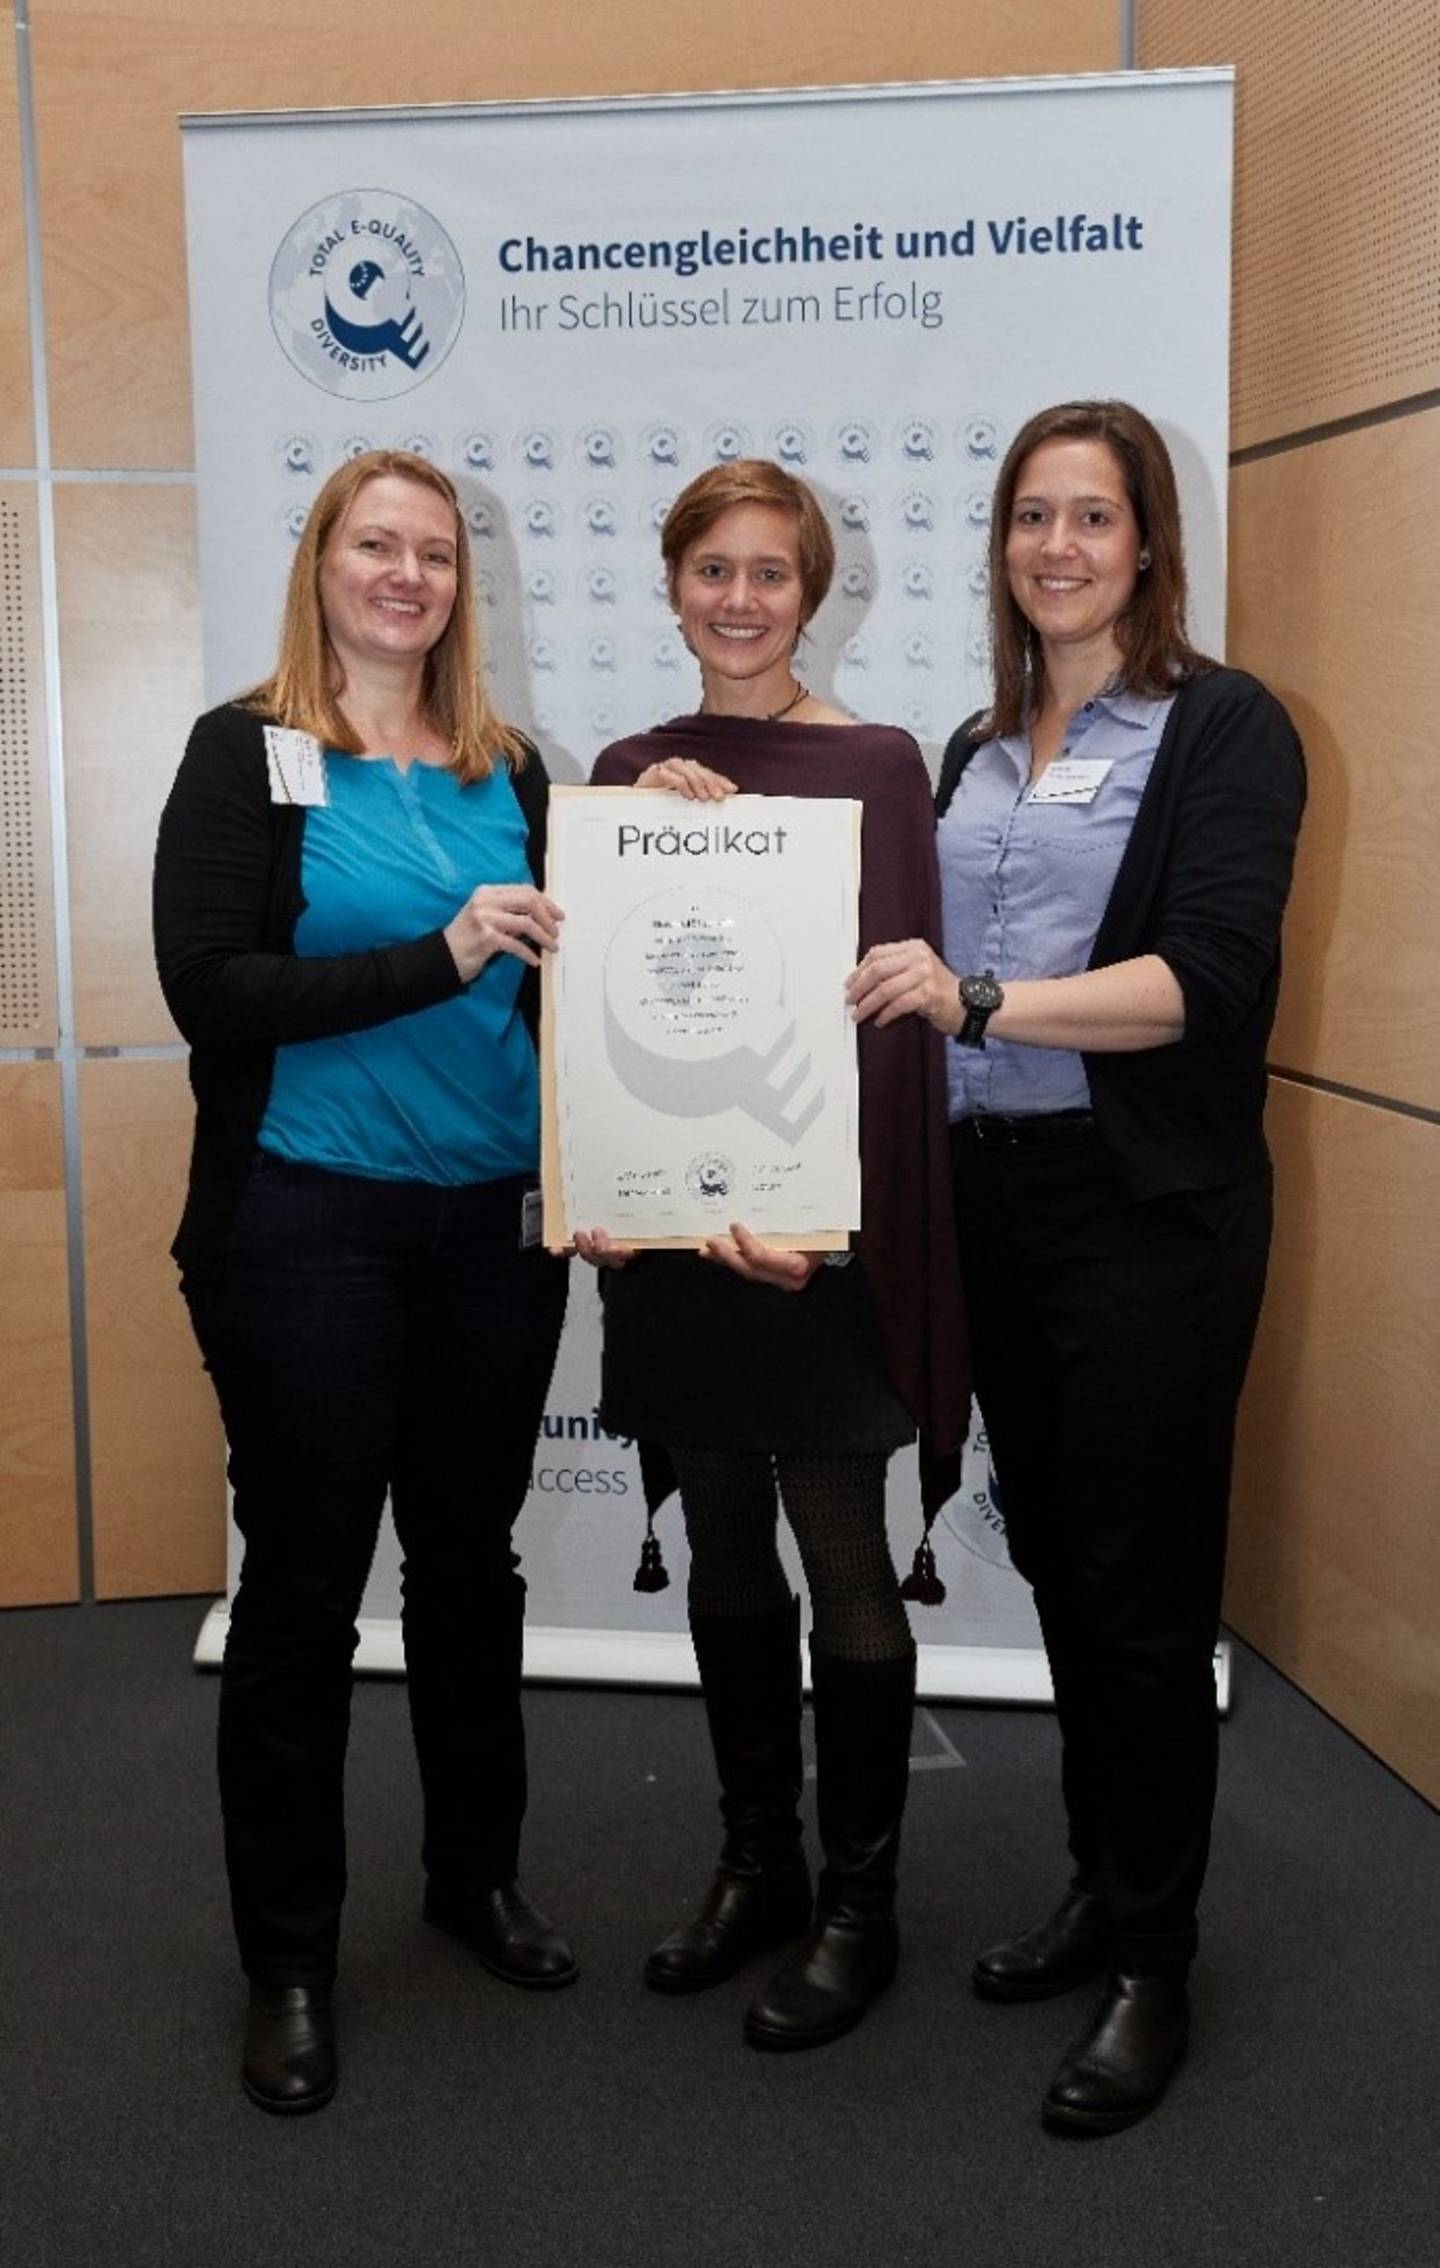 Daniela Steffes, Dr.' Britt Dahmen, Anne Haffke (Department Gender & Diversity Management) at the award of the Total E-Quality award in Stuttgart